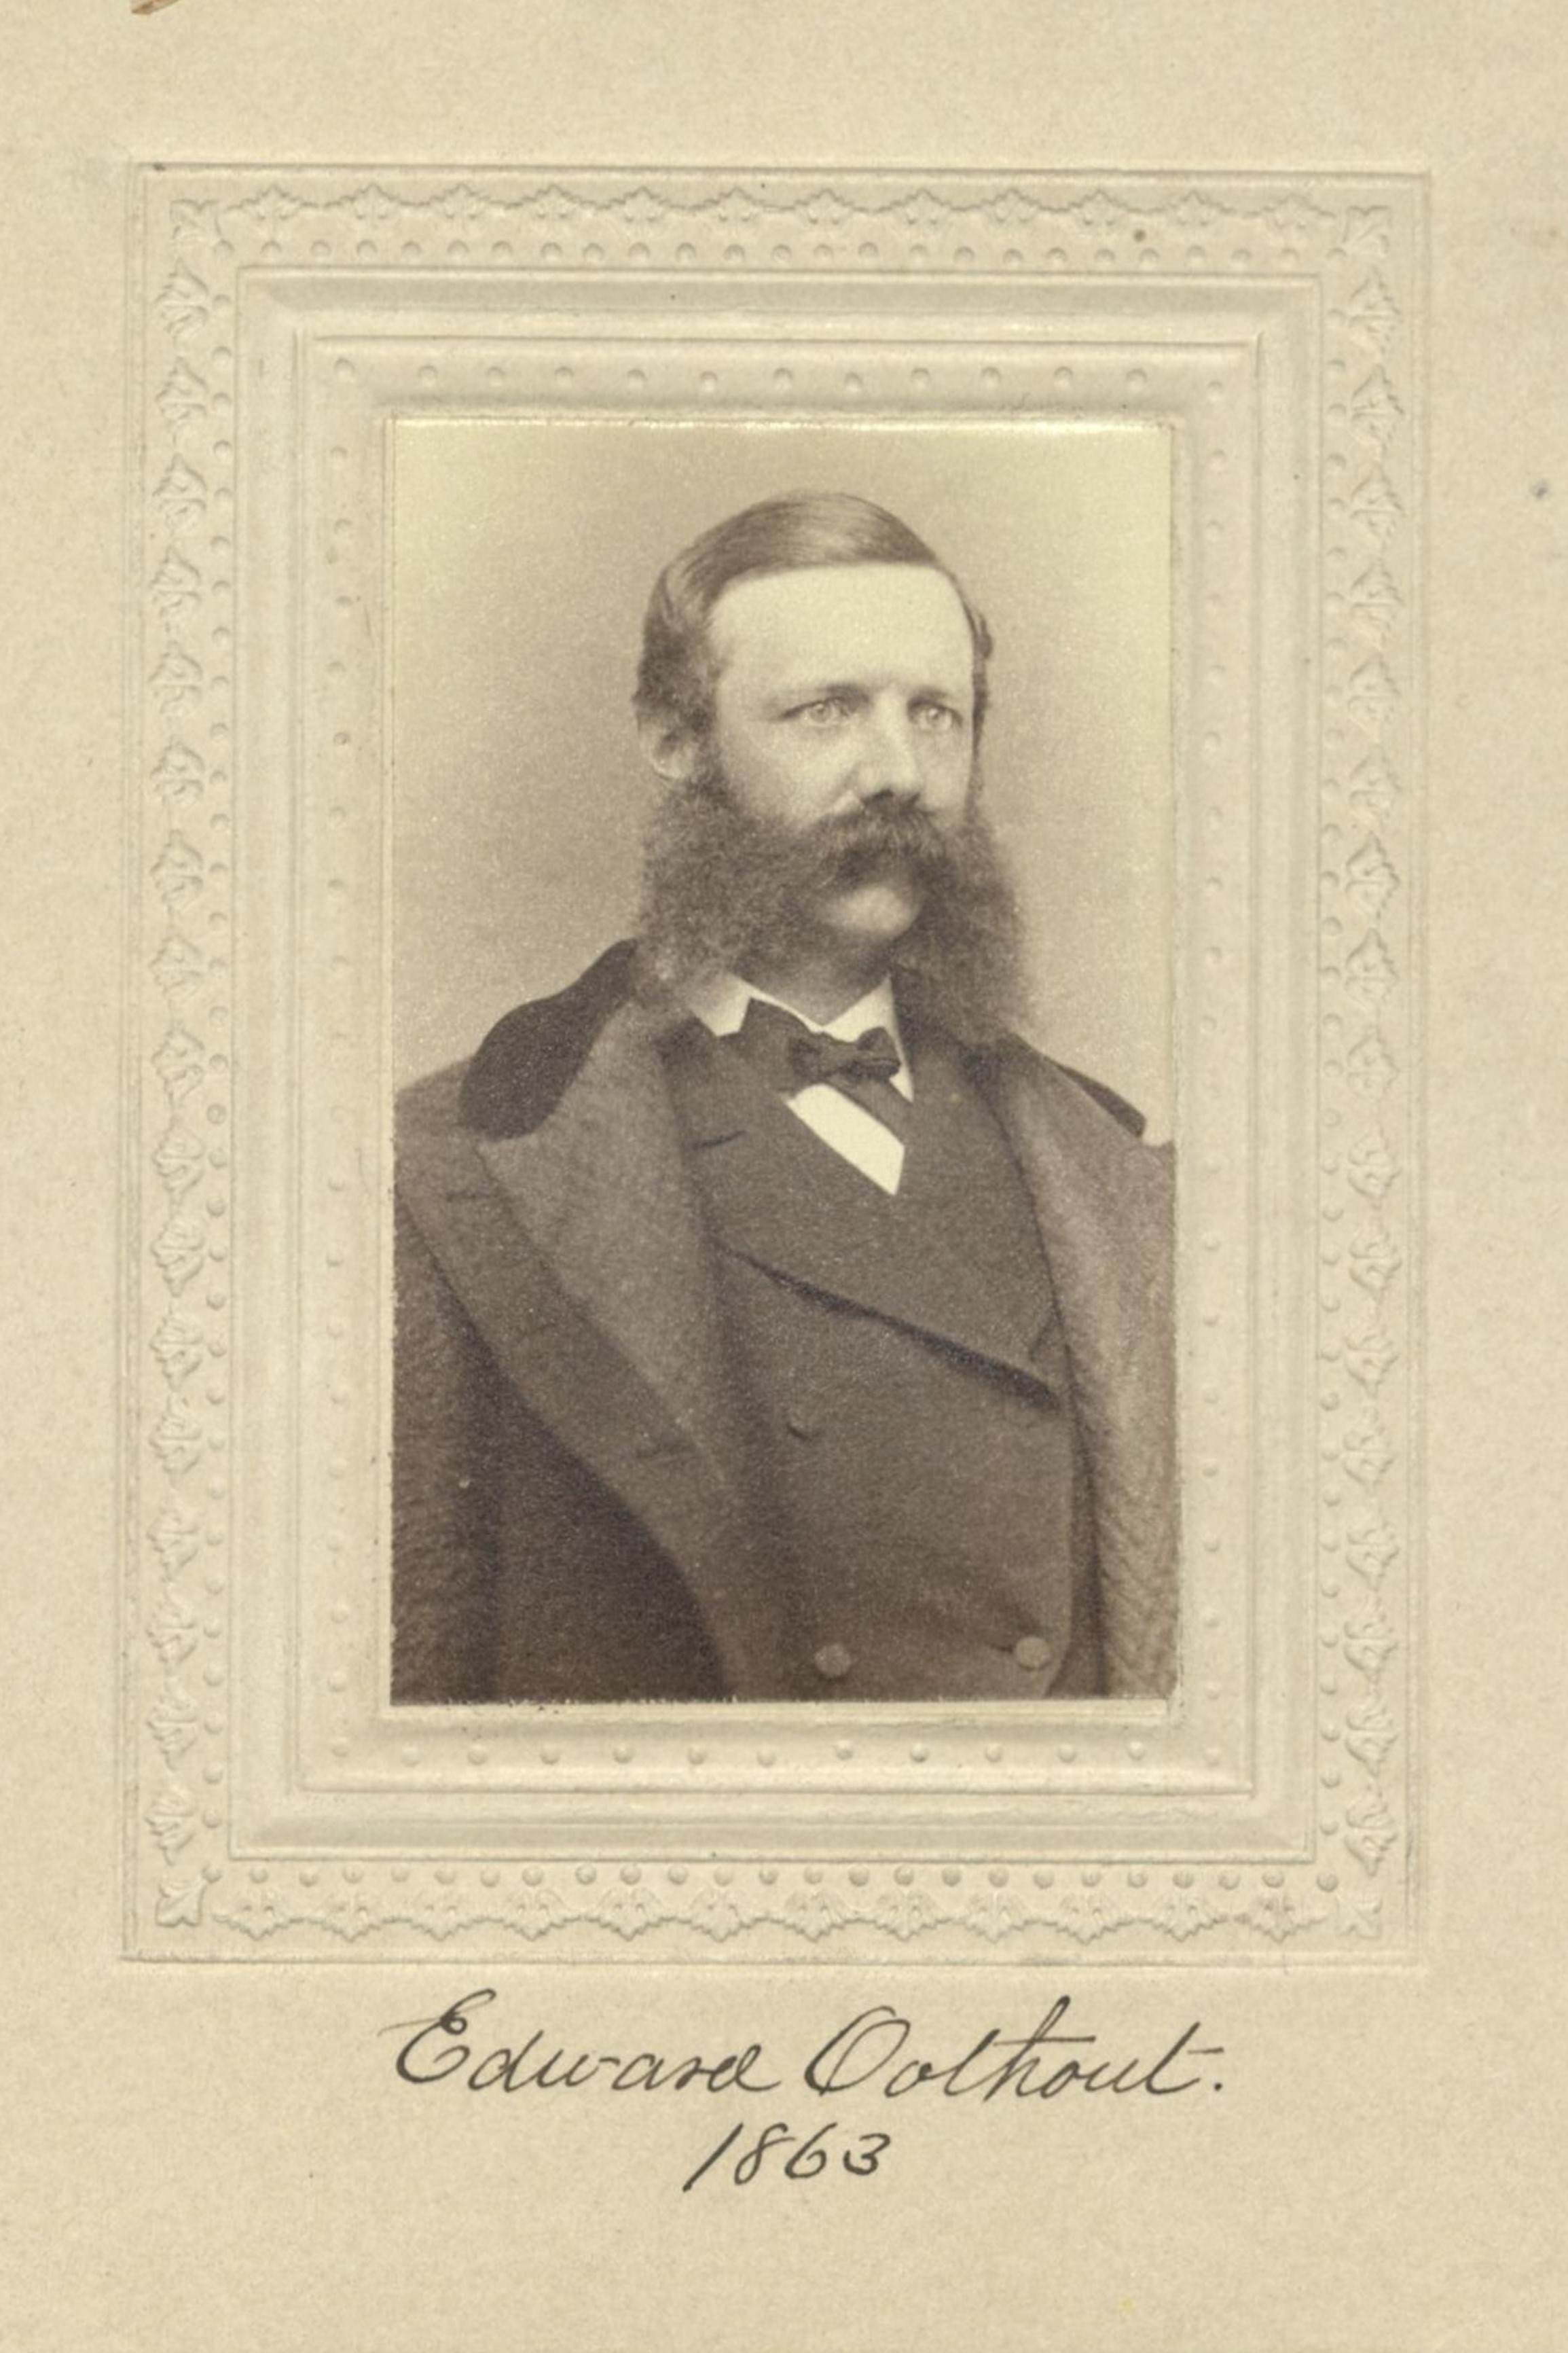 Member portrait of Edward Oothout